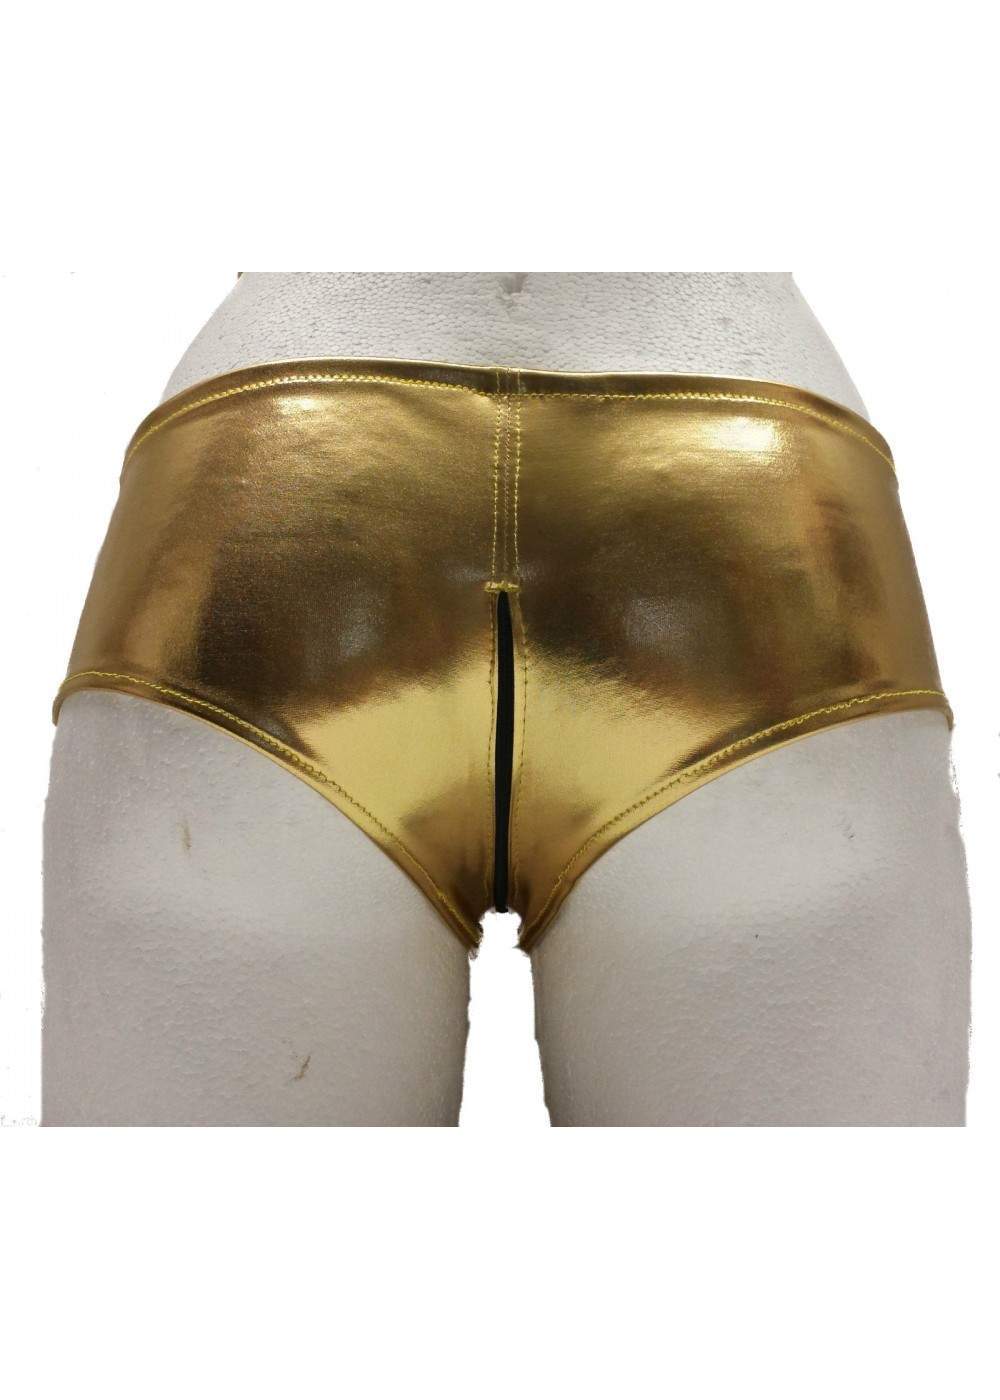 Pantalones calientes Ouvert de cuero dorado con cremallera Tallas 3... - Deutsche Produktion